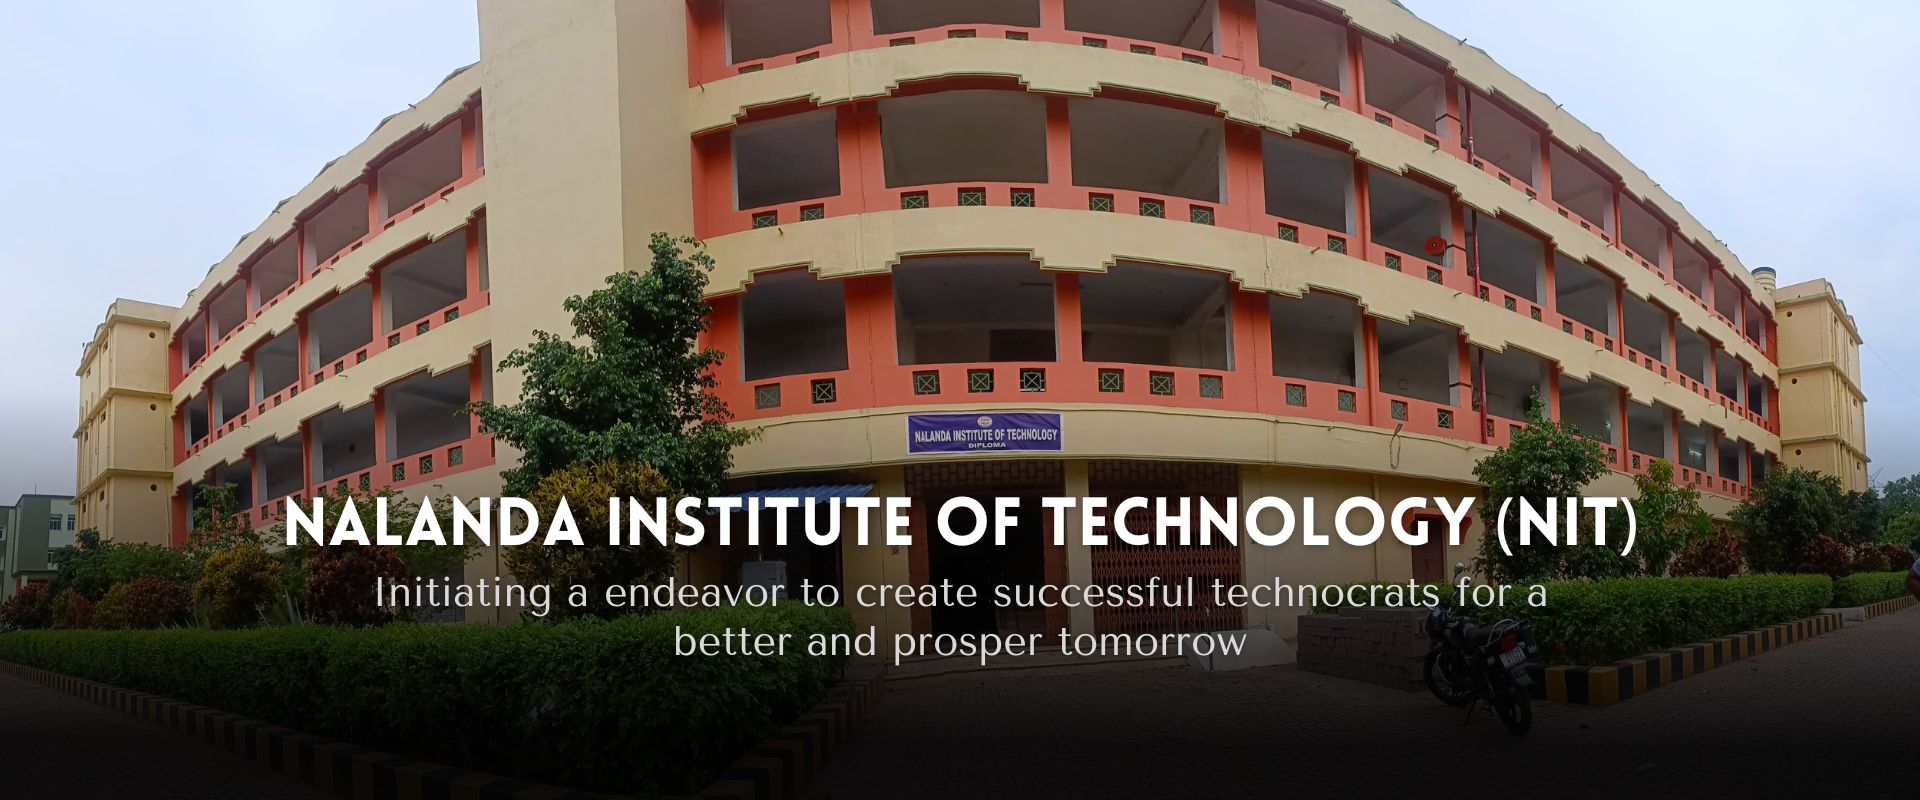 Nalanda Institute of Technology (NIT) (7)